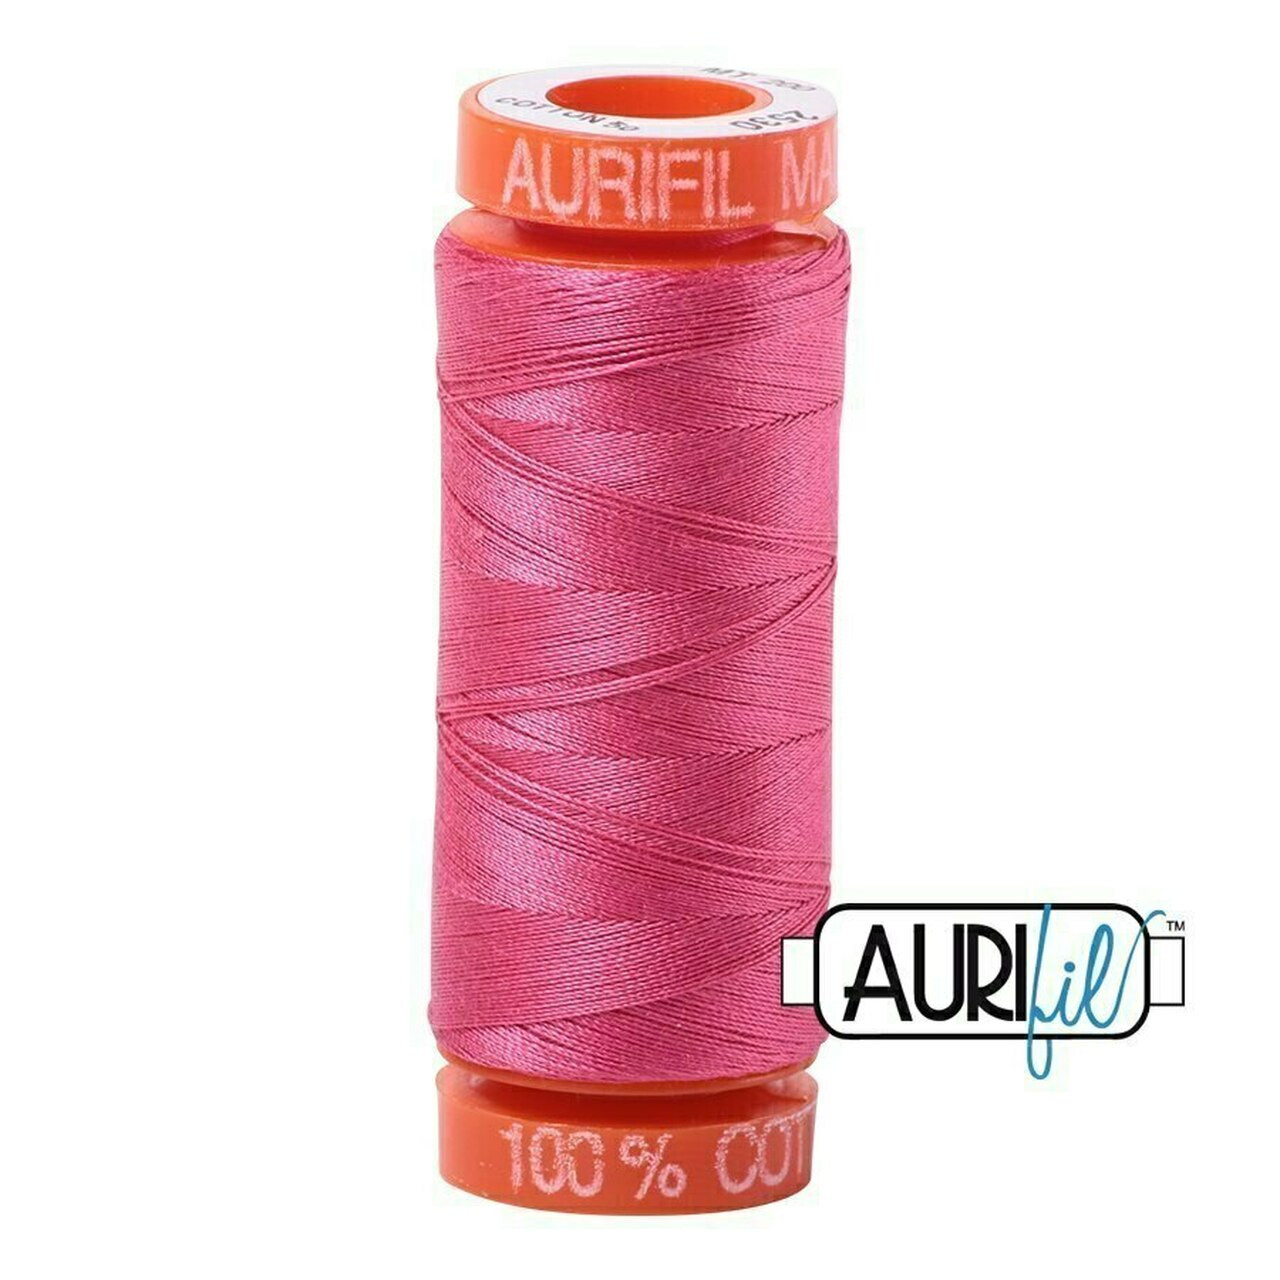 Aurifil 2530 - Blossom Pink